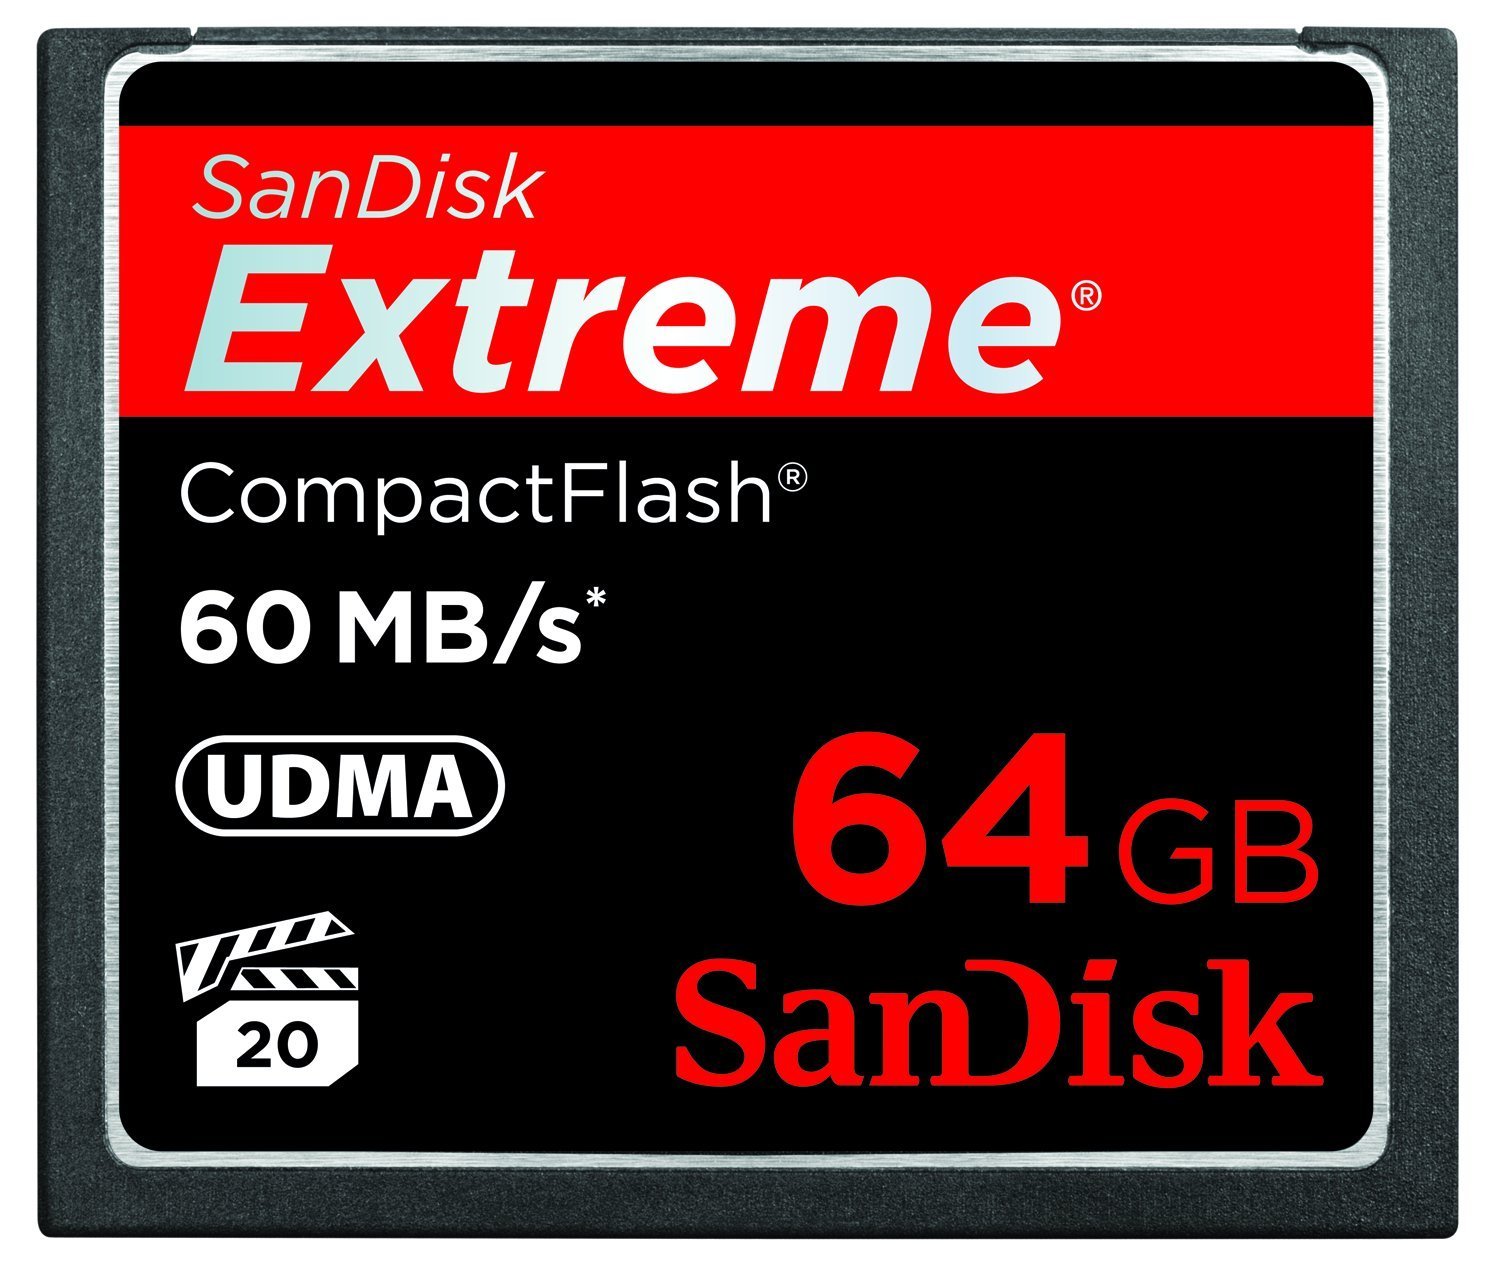 Extreme de SanDisk CompactFlash 64 GB memoria tarjeta de 60MB/s